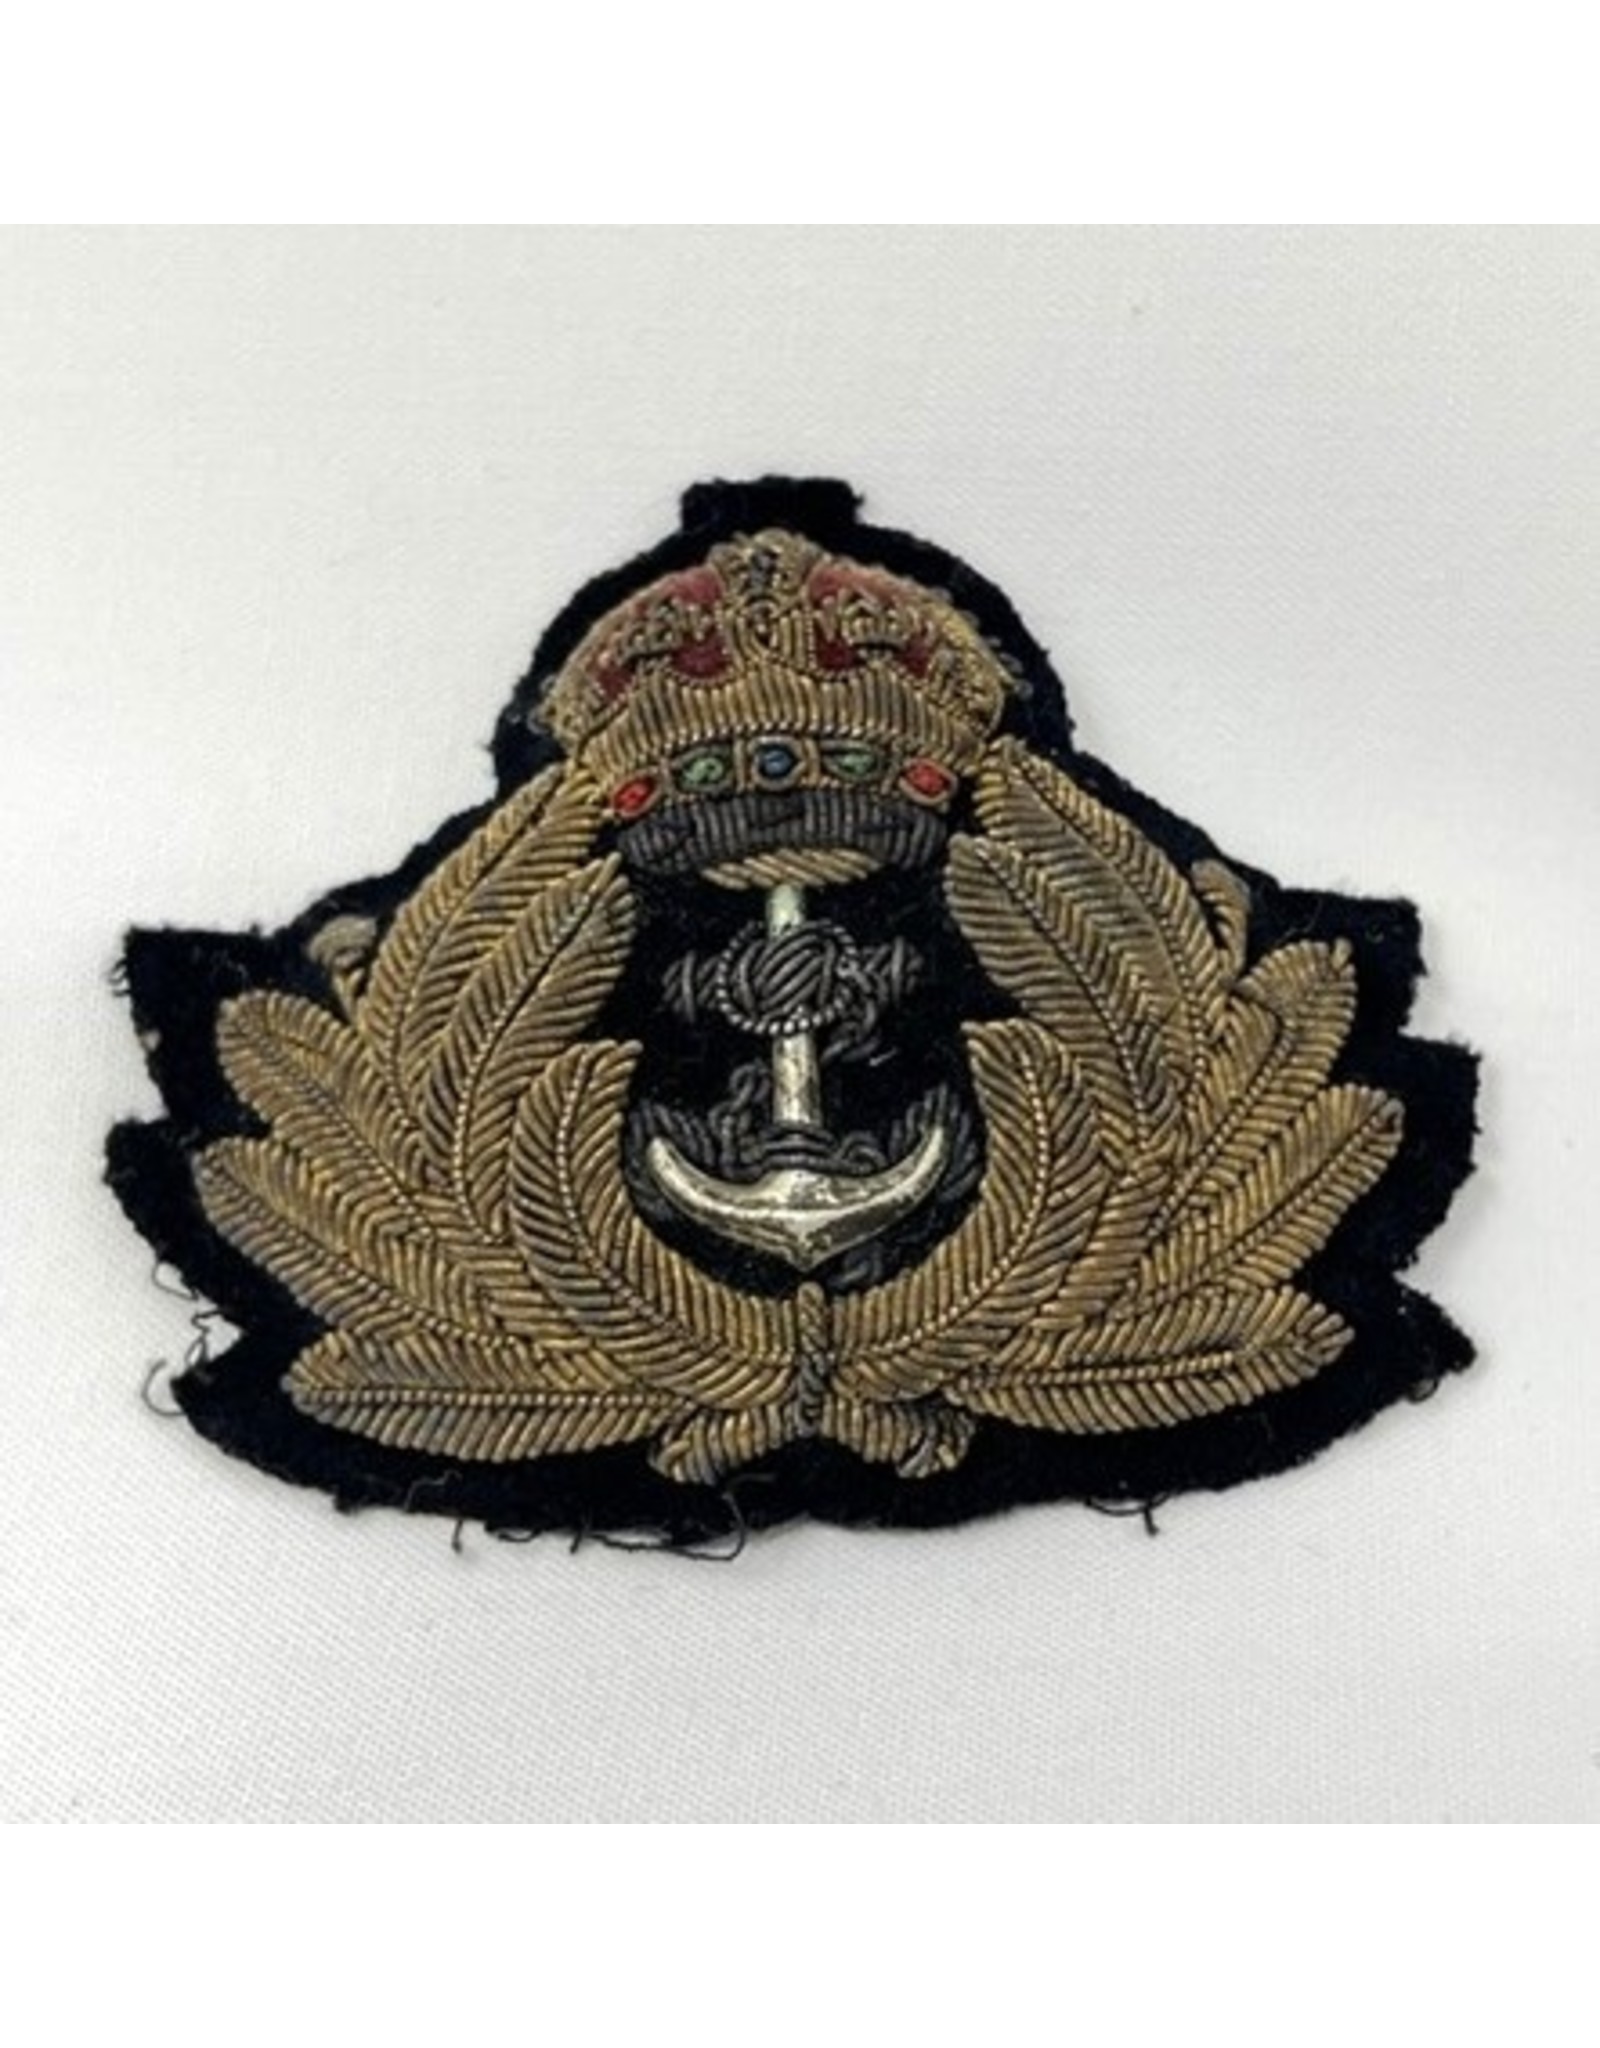 Insignia - vintage Royal Navy officer's cap badge, bullion thread, Tudor crown 1940s